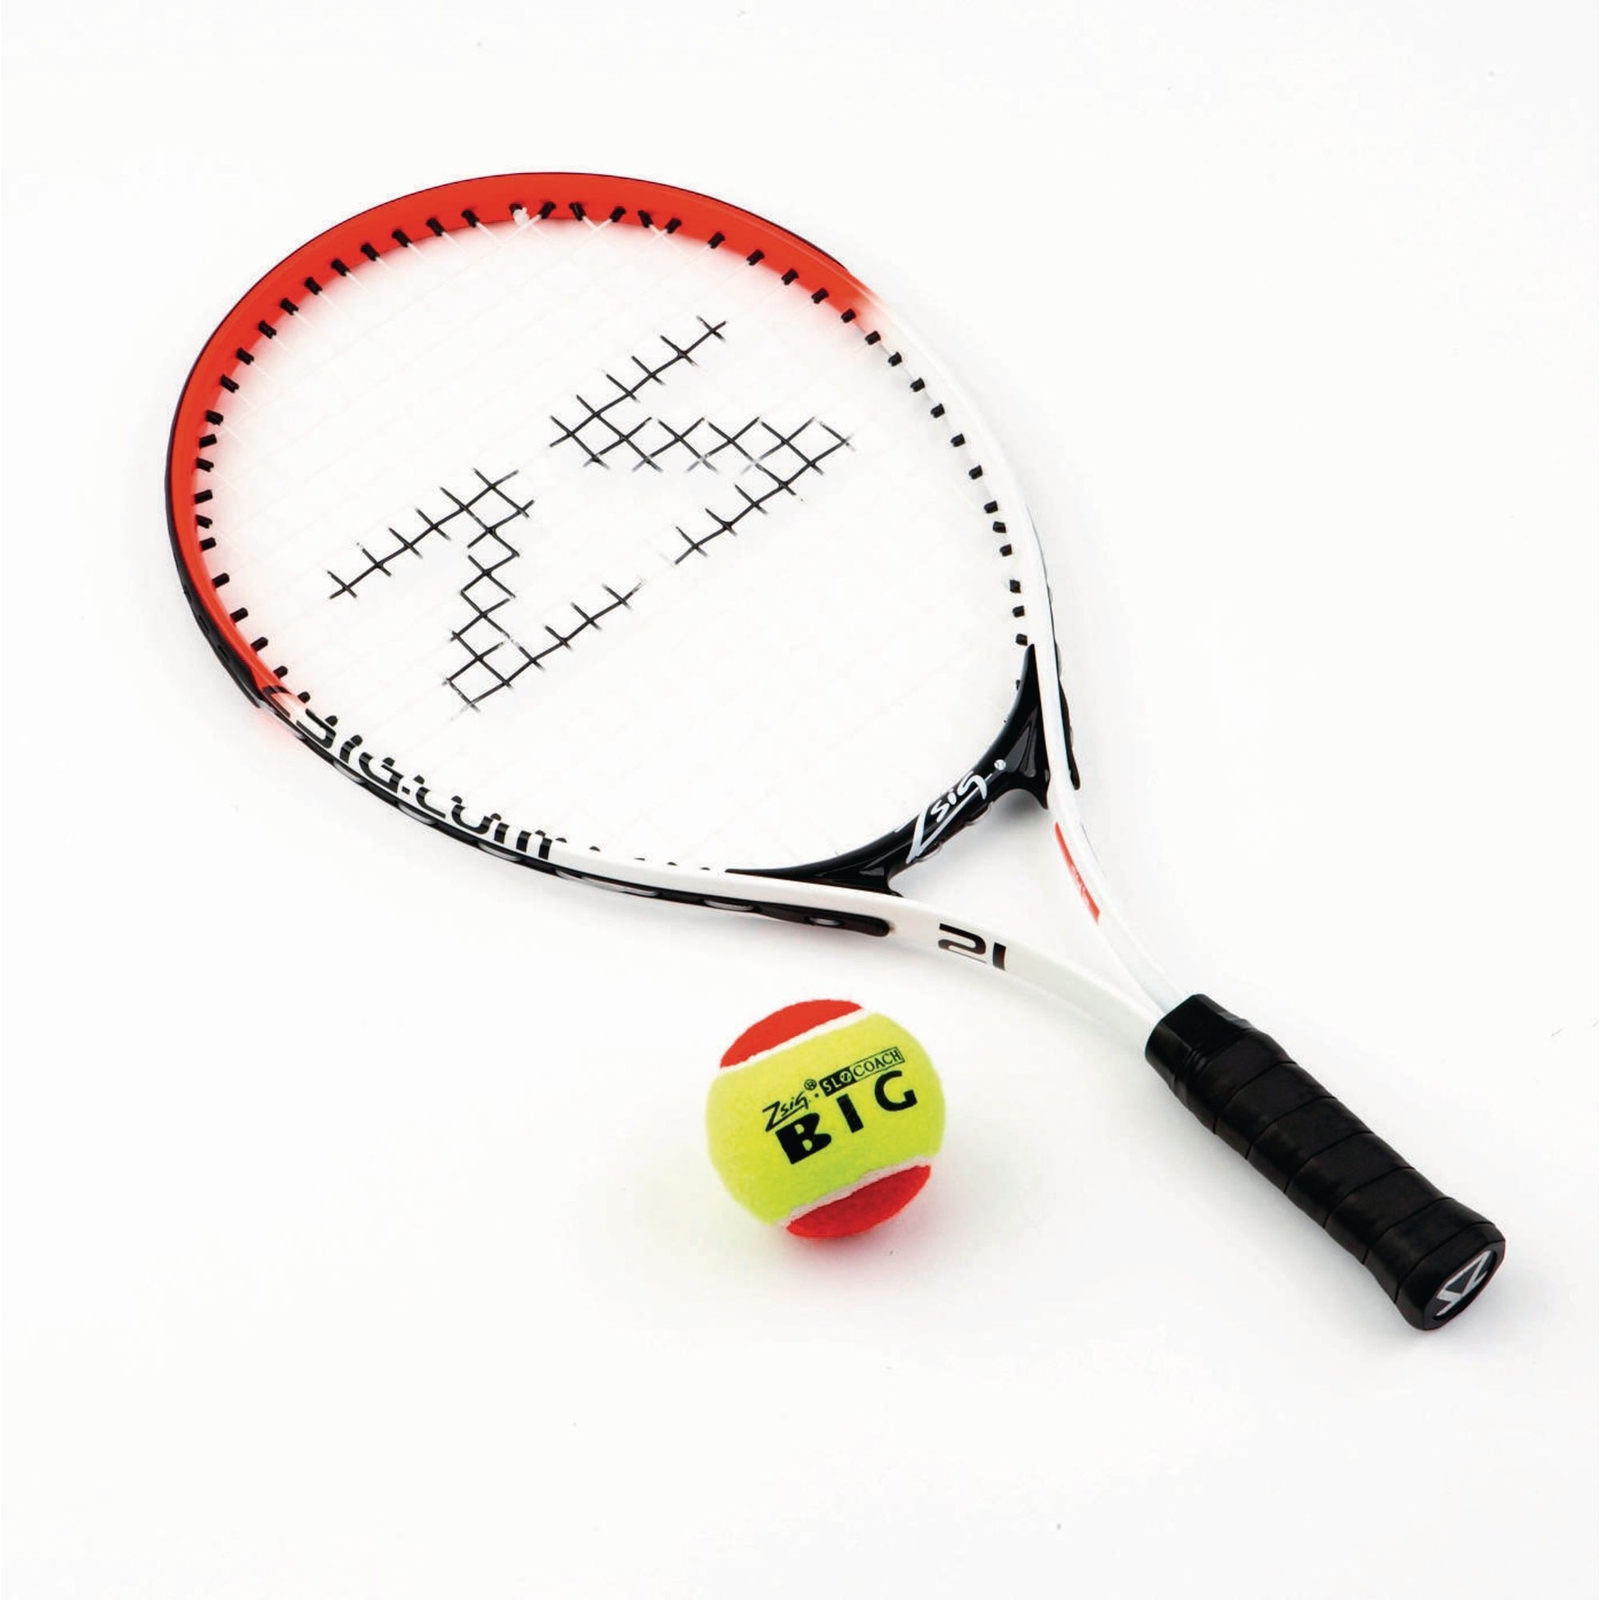 Zsig Red Tennis Racket - 21in" - Each